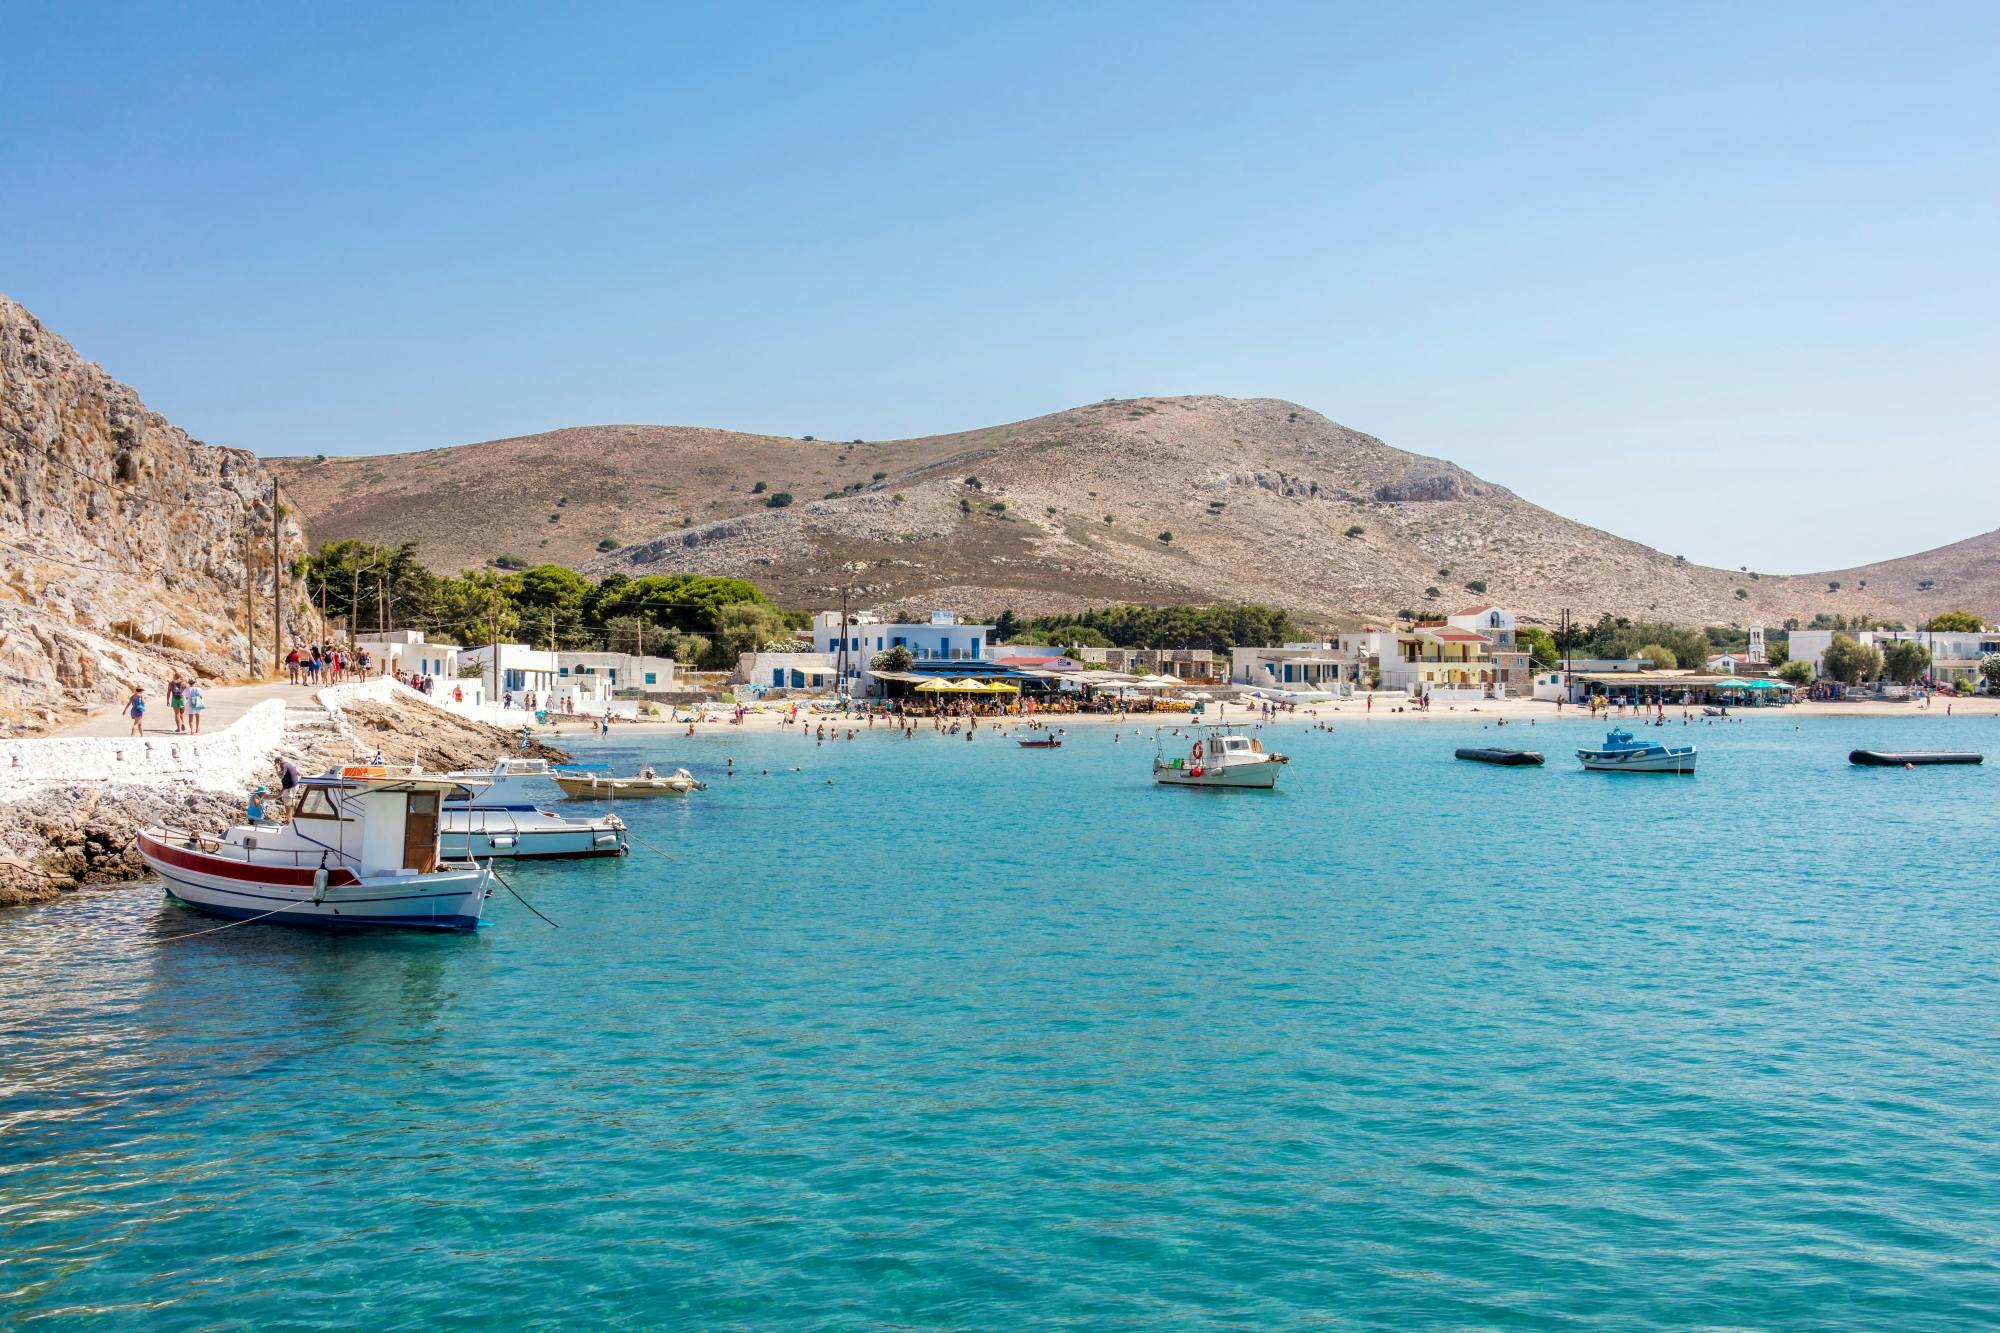 Aegean Cruise with Kalymnos Island